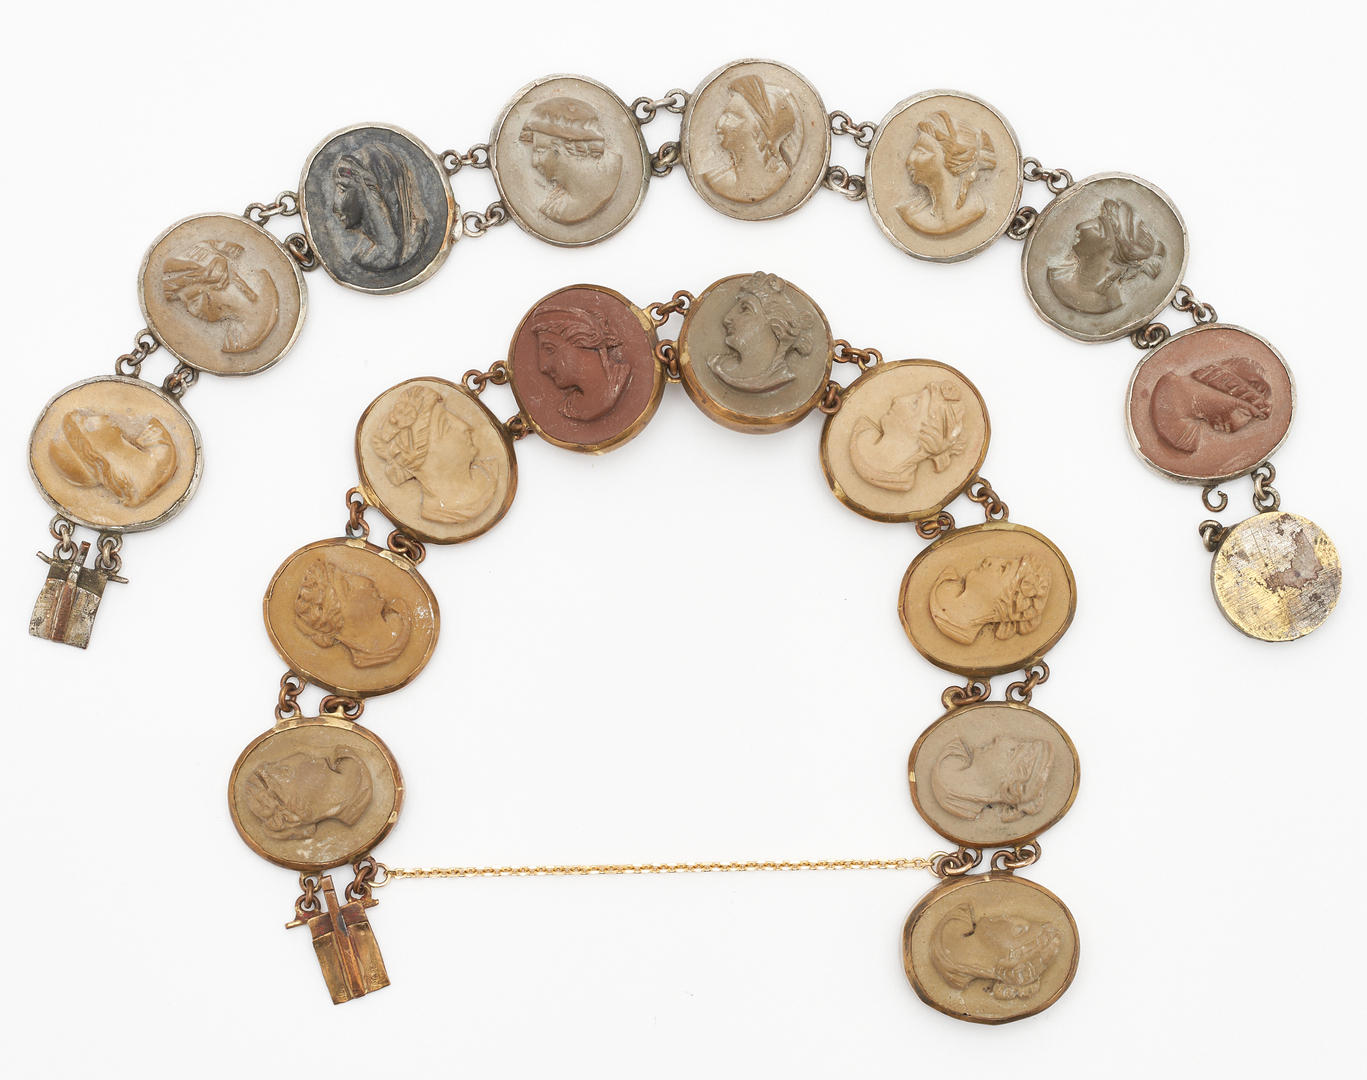 Lot 18: 14K Enameled Bracelet, 4 Basalt Cameo and 3 Micro Mosaic jewelry items